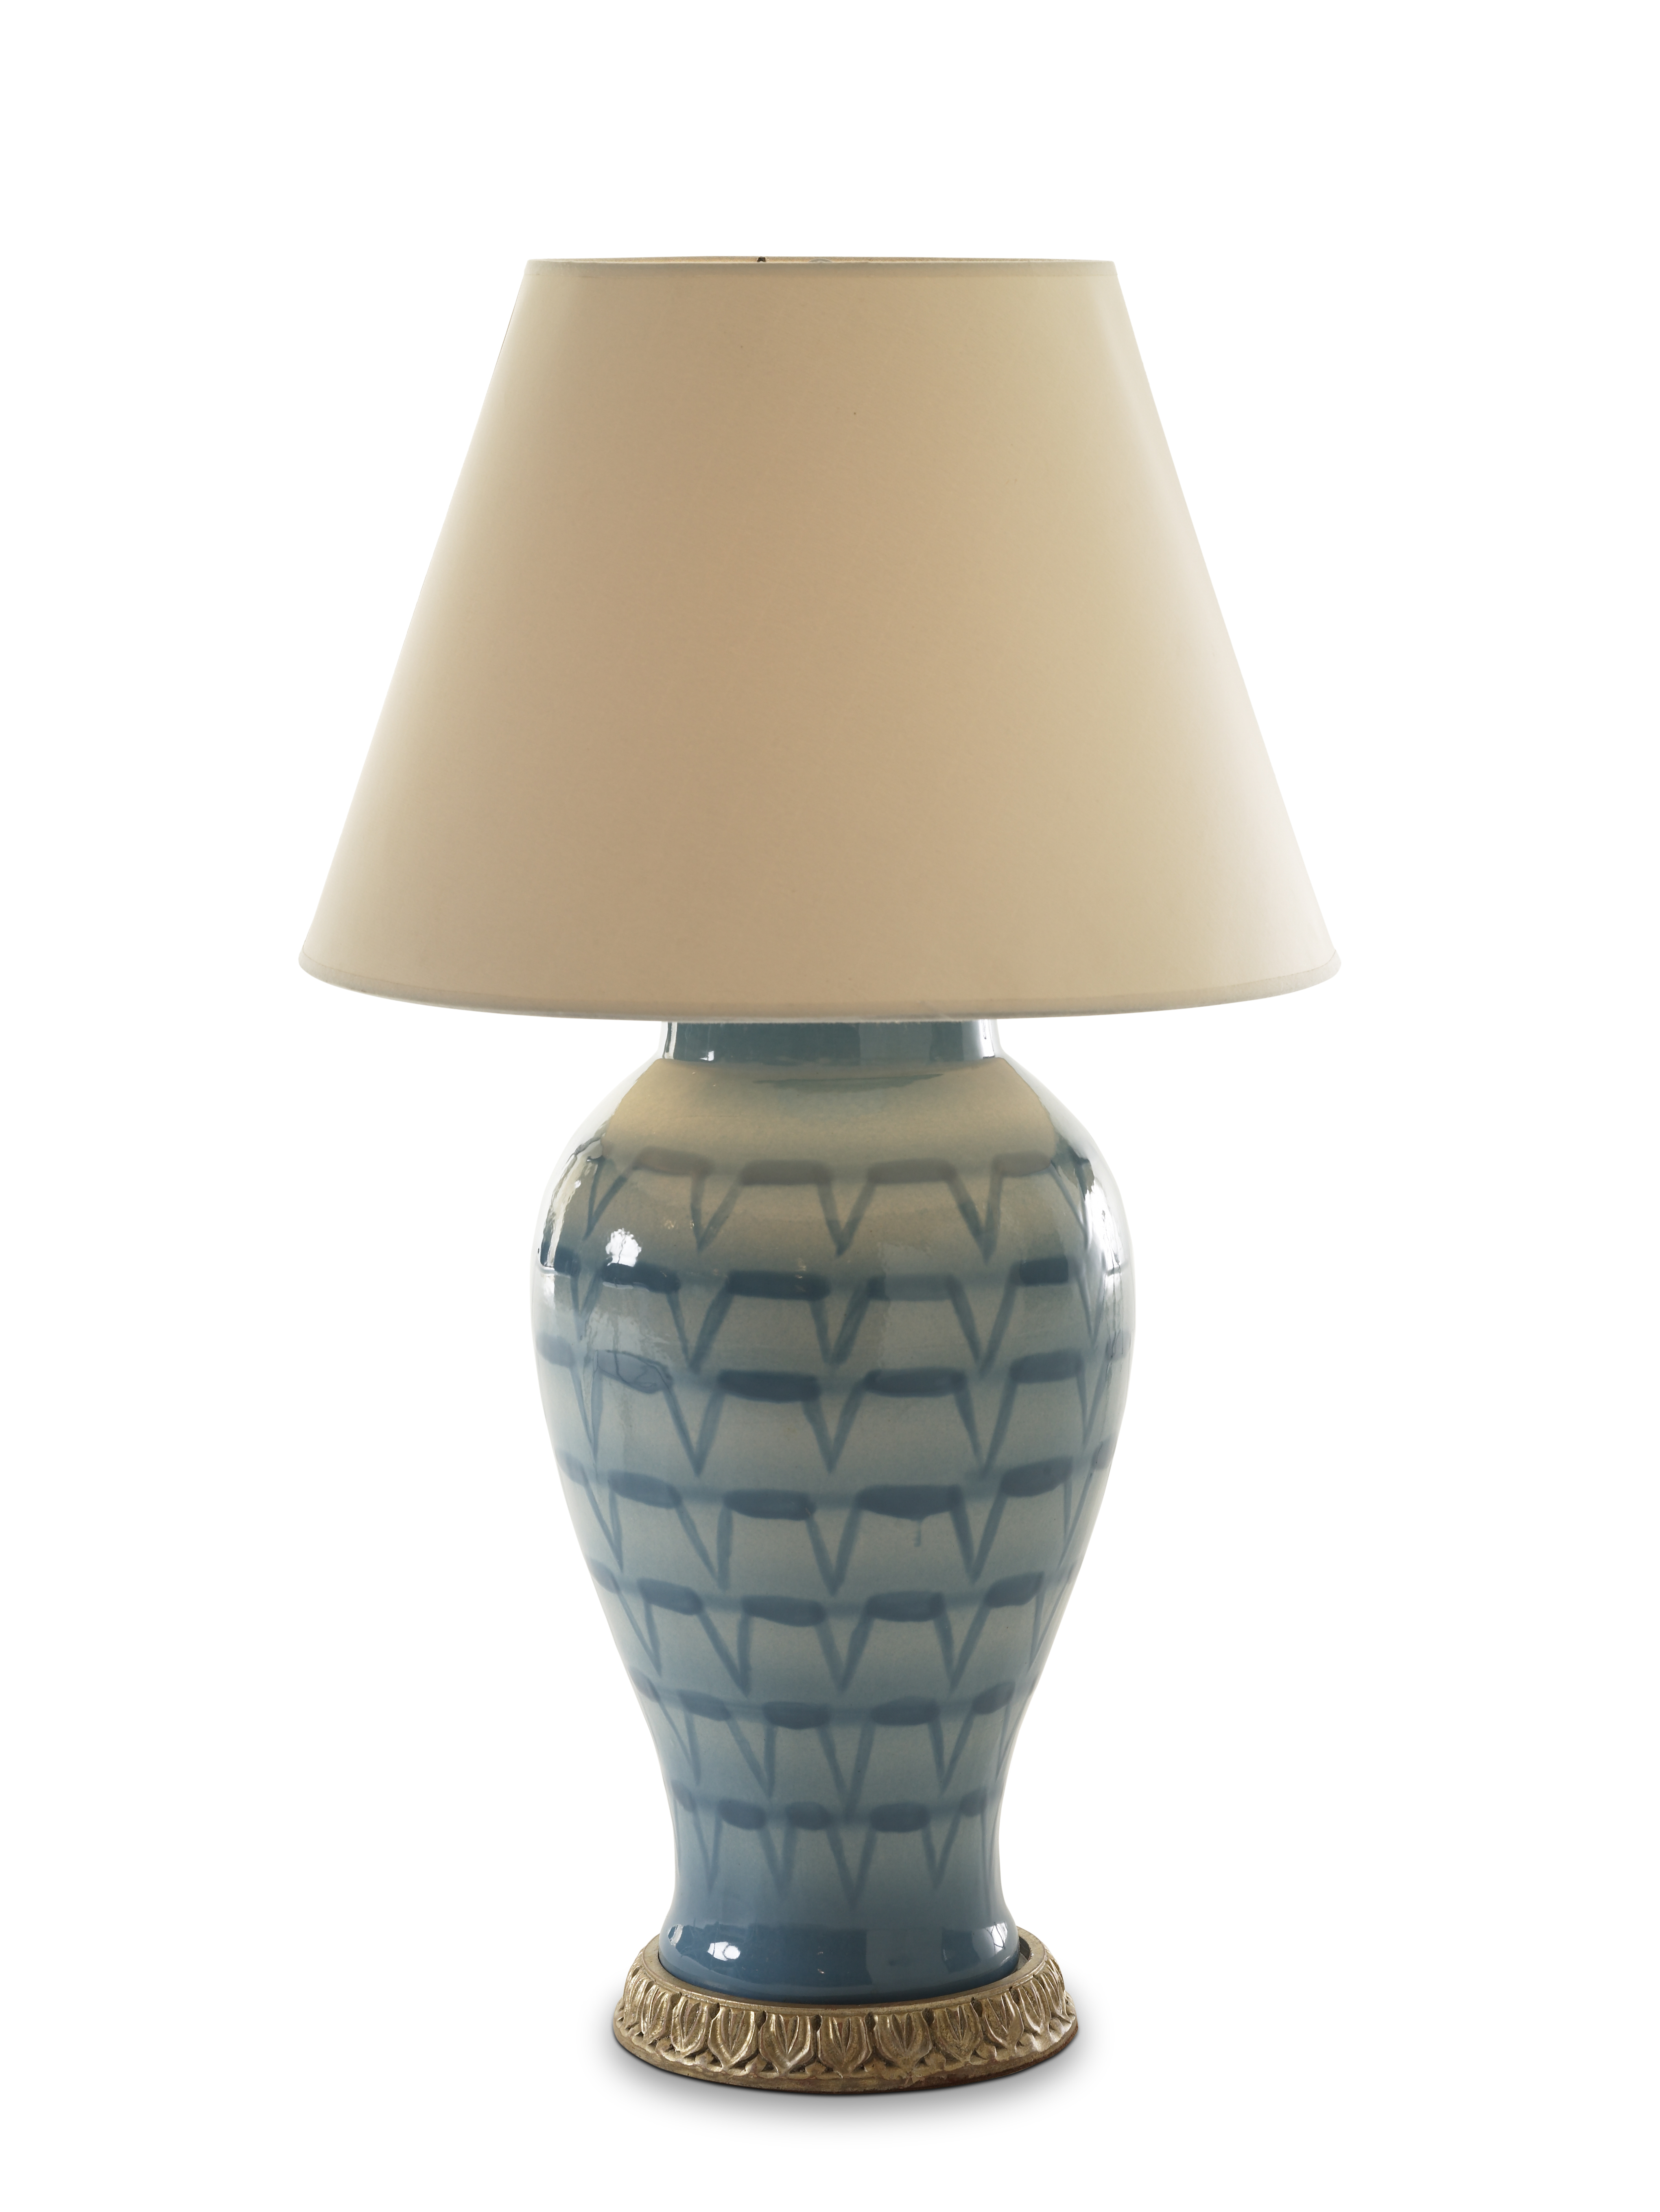 Bunny-Williams-Turquoise-Glazed-Lamp